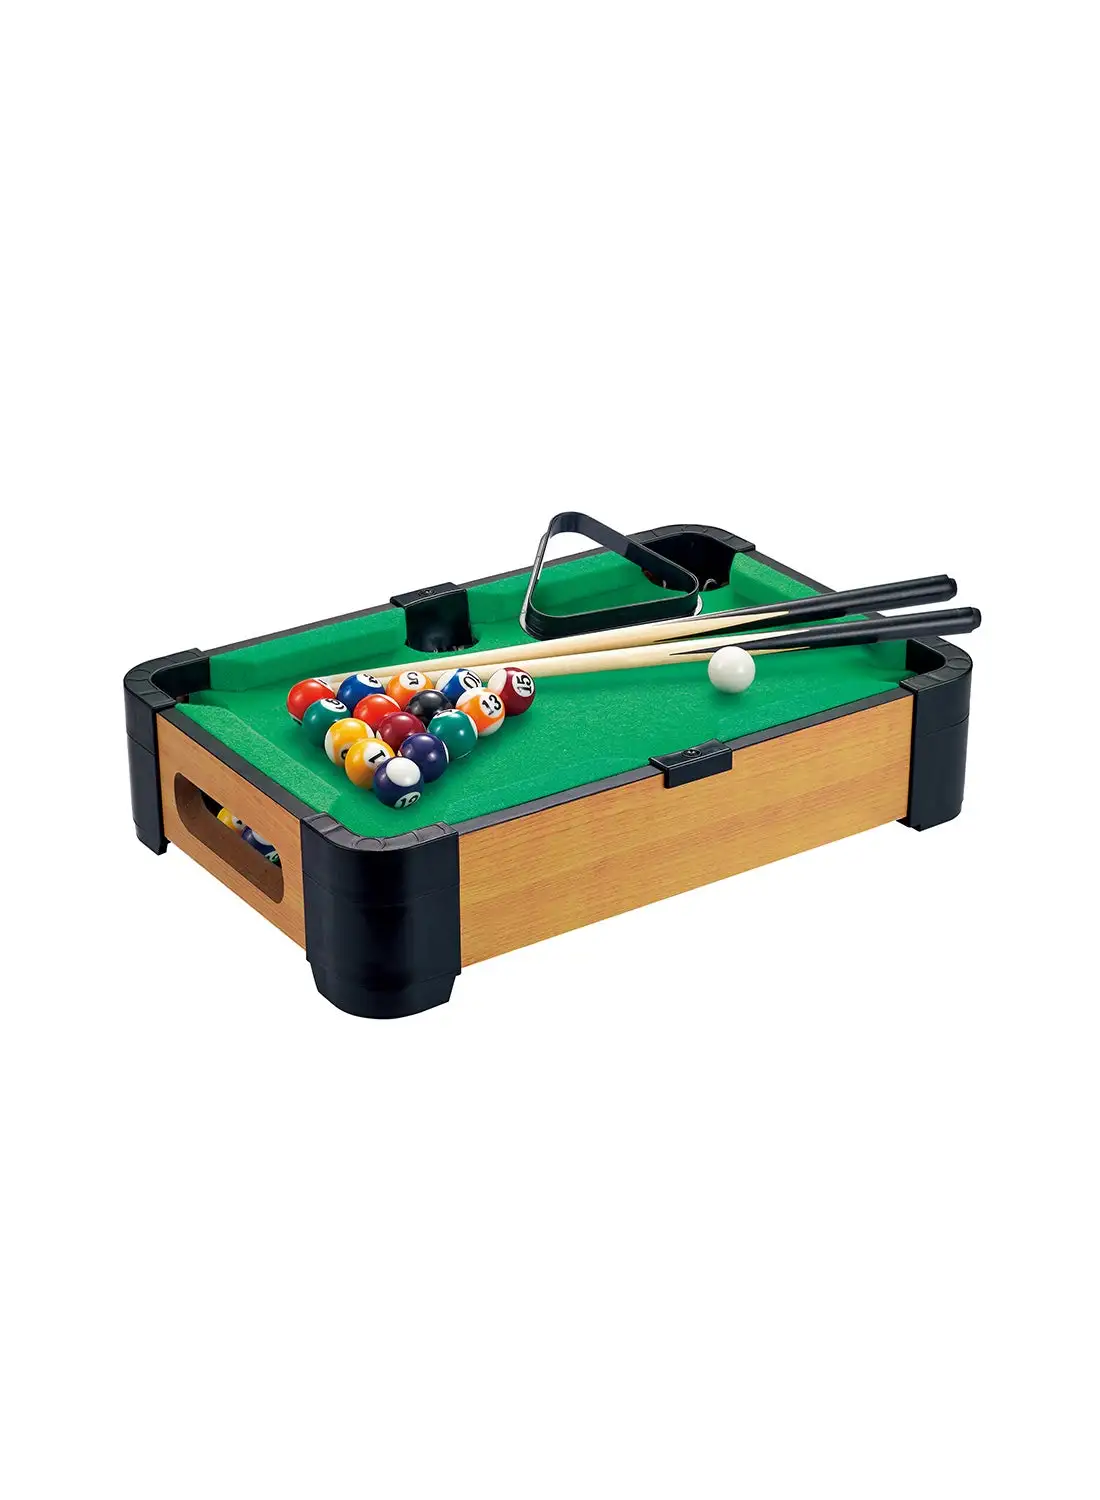 XIANGJUN Billiards Pool Table Game Set 35x23.5x9cm